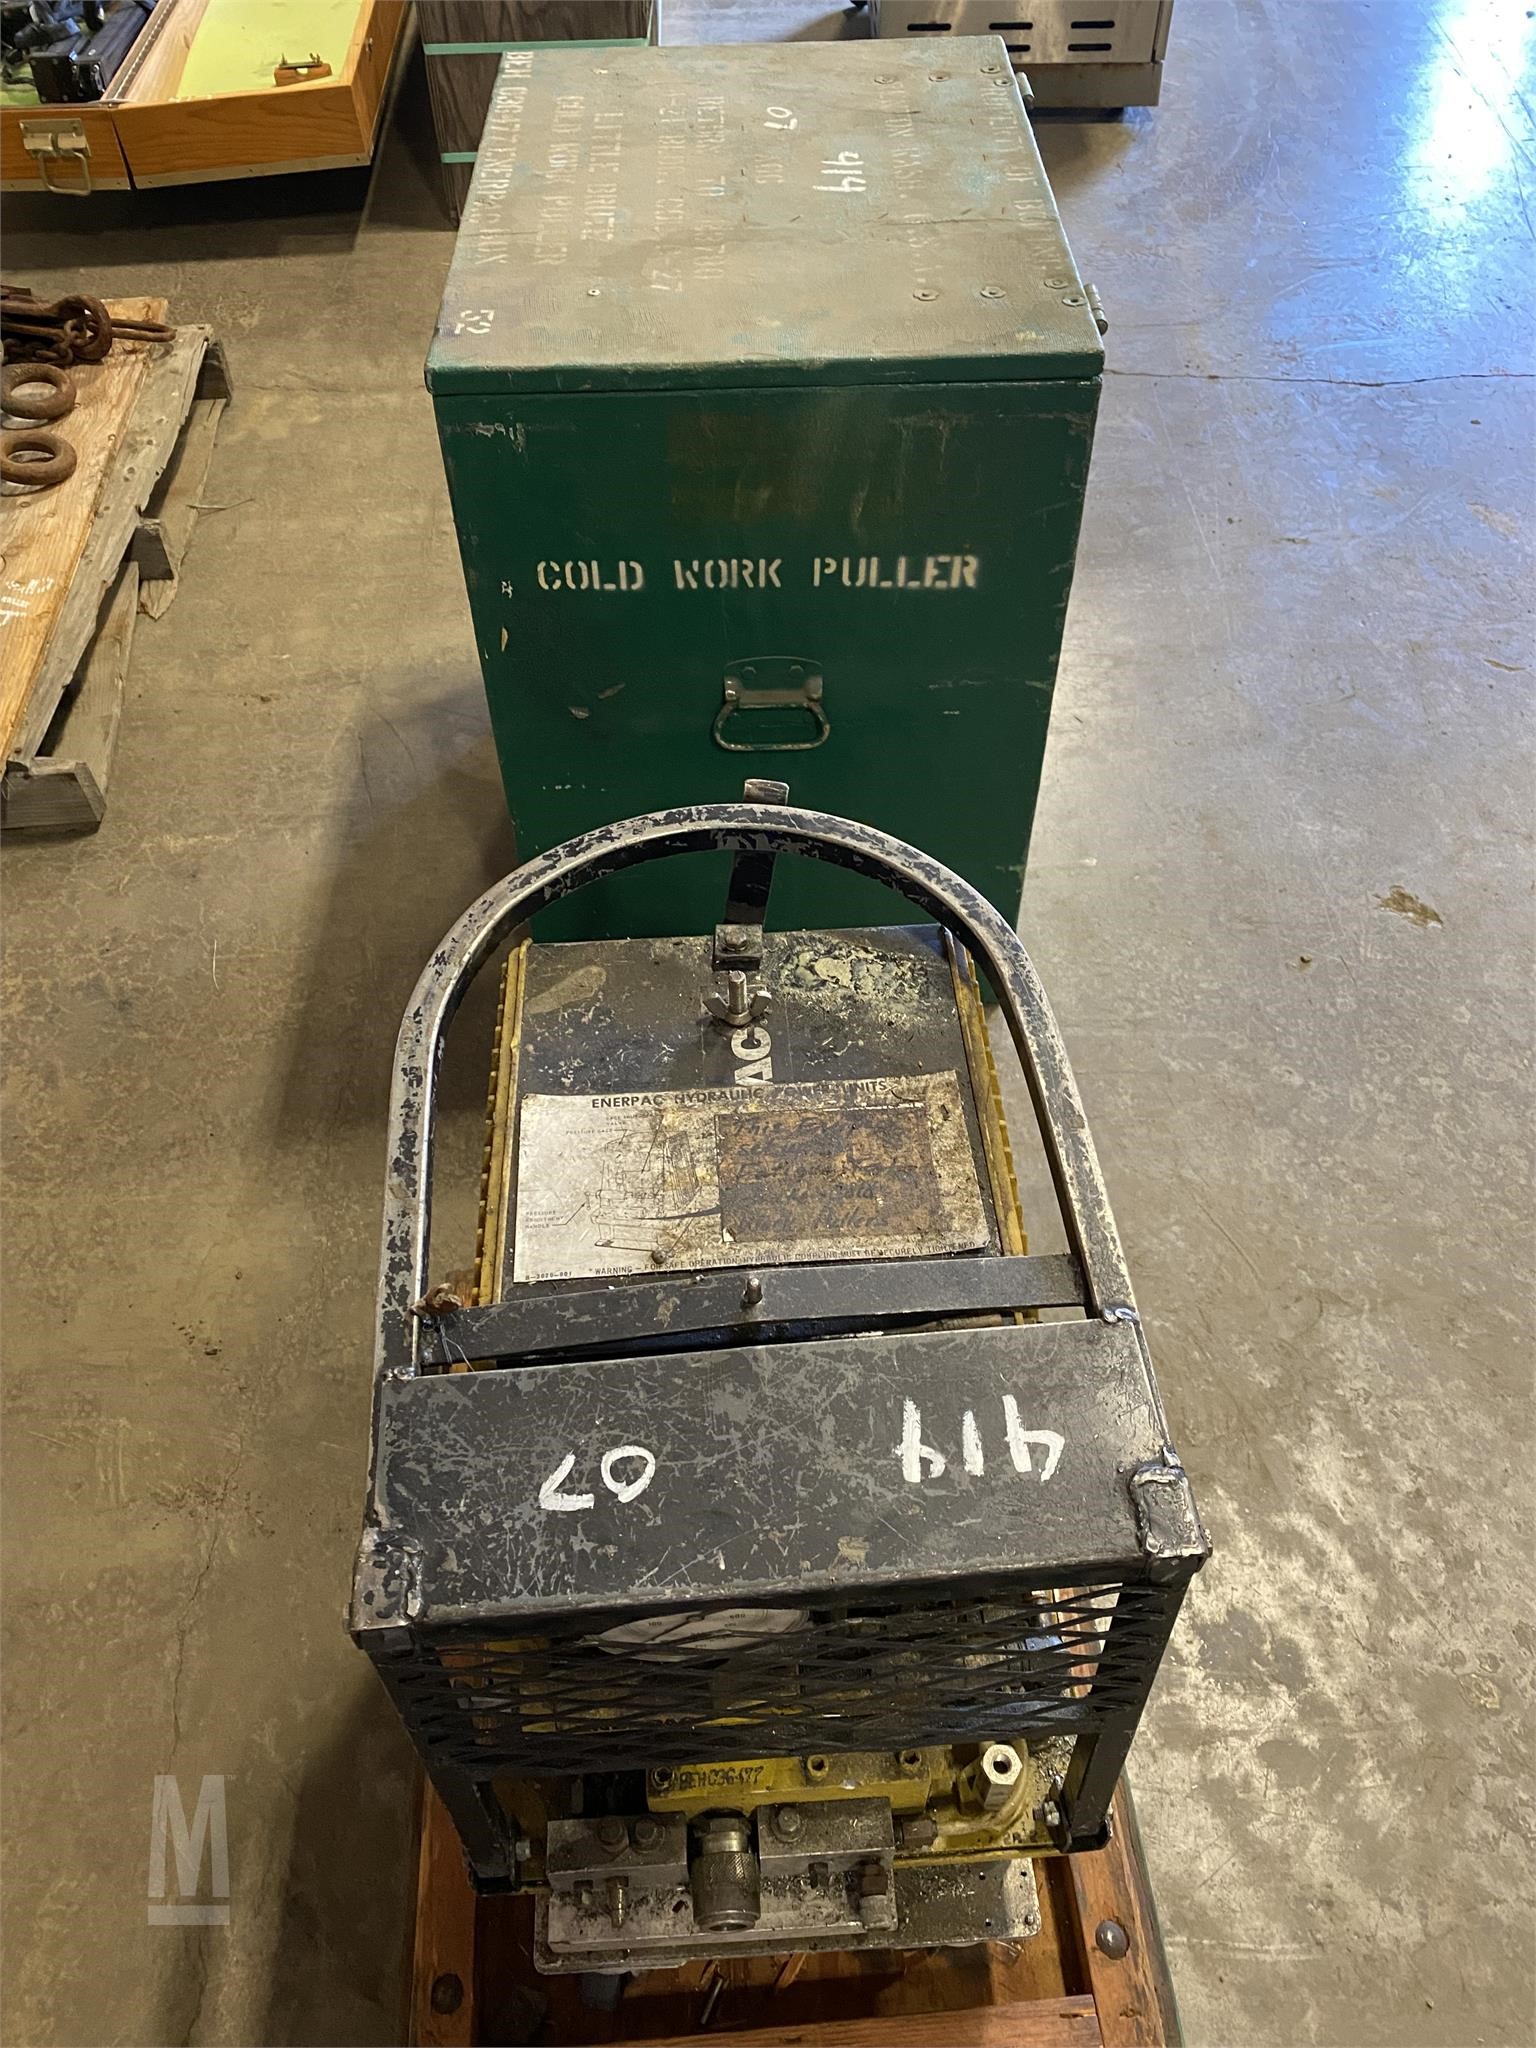 Uline Industrial Trash Liners - 12-16 Gallon, 1.2 Mil, Black